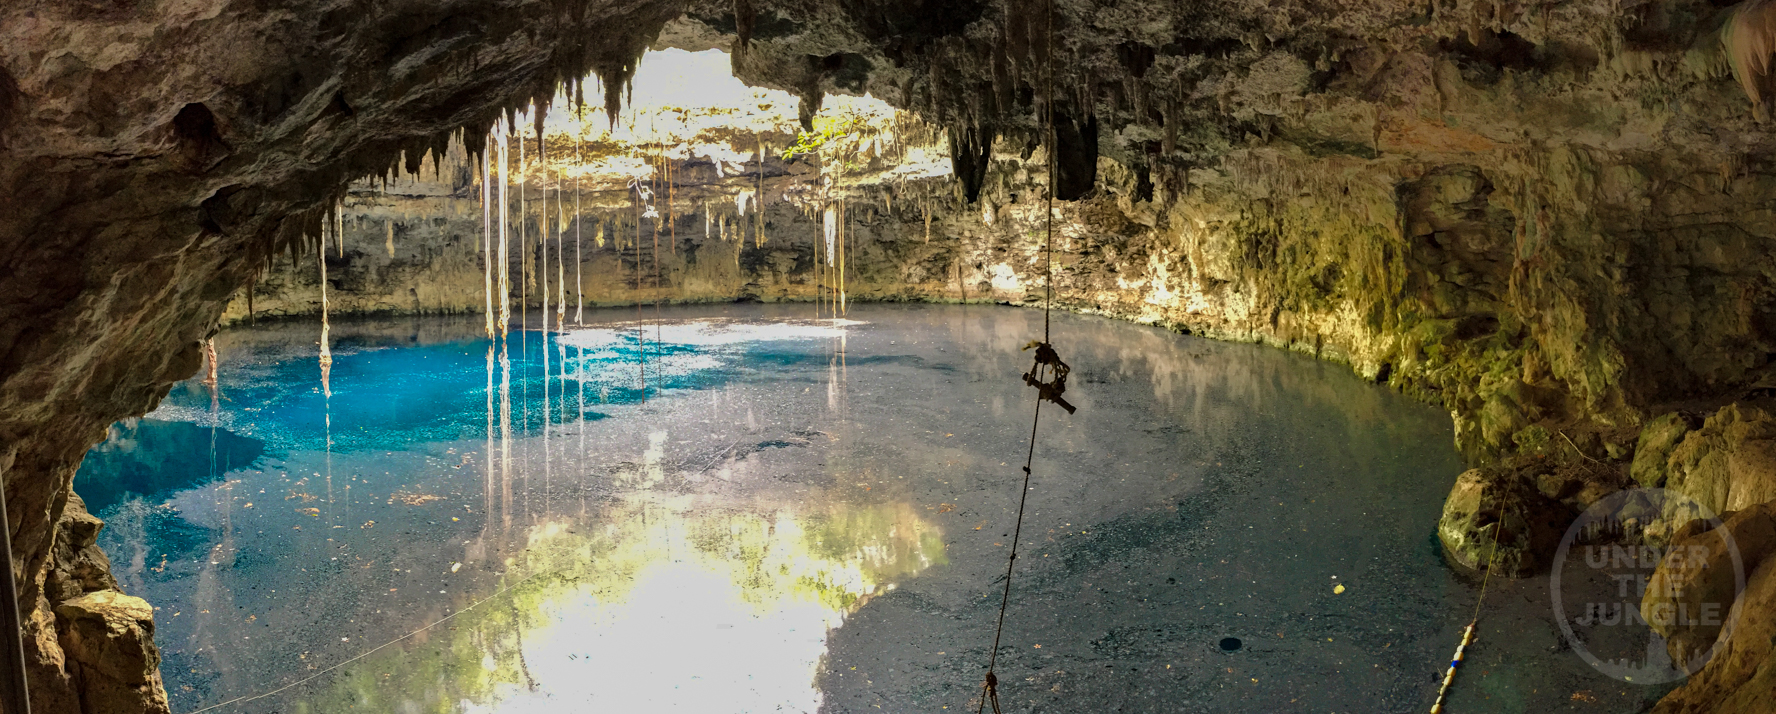 Under the Jungle, Cenote Xoch, Sinkhole Diving Mexico, Yucatan Sinkholes, Cave Diving Yucatan